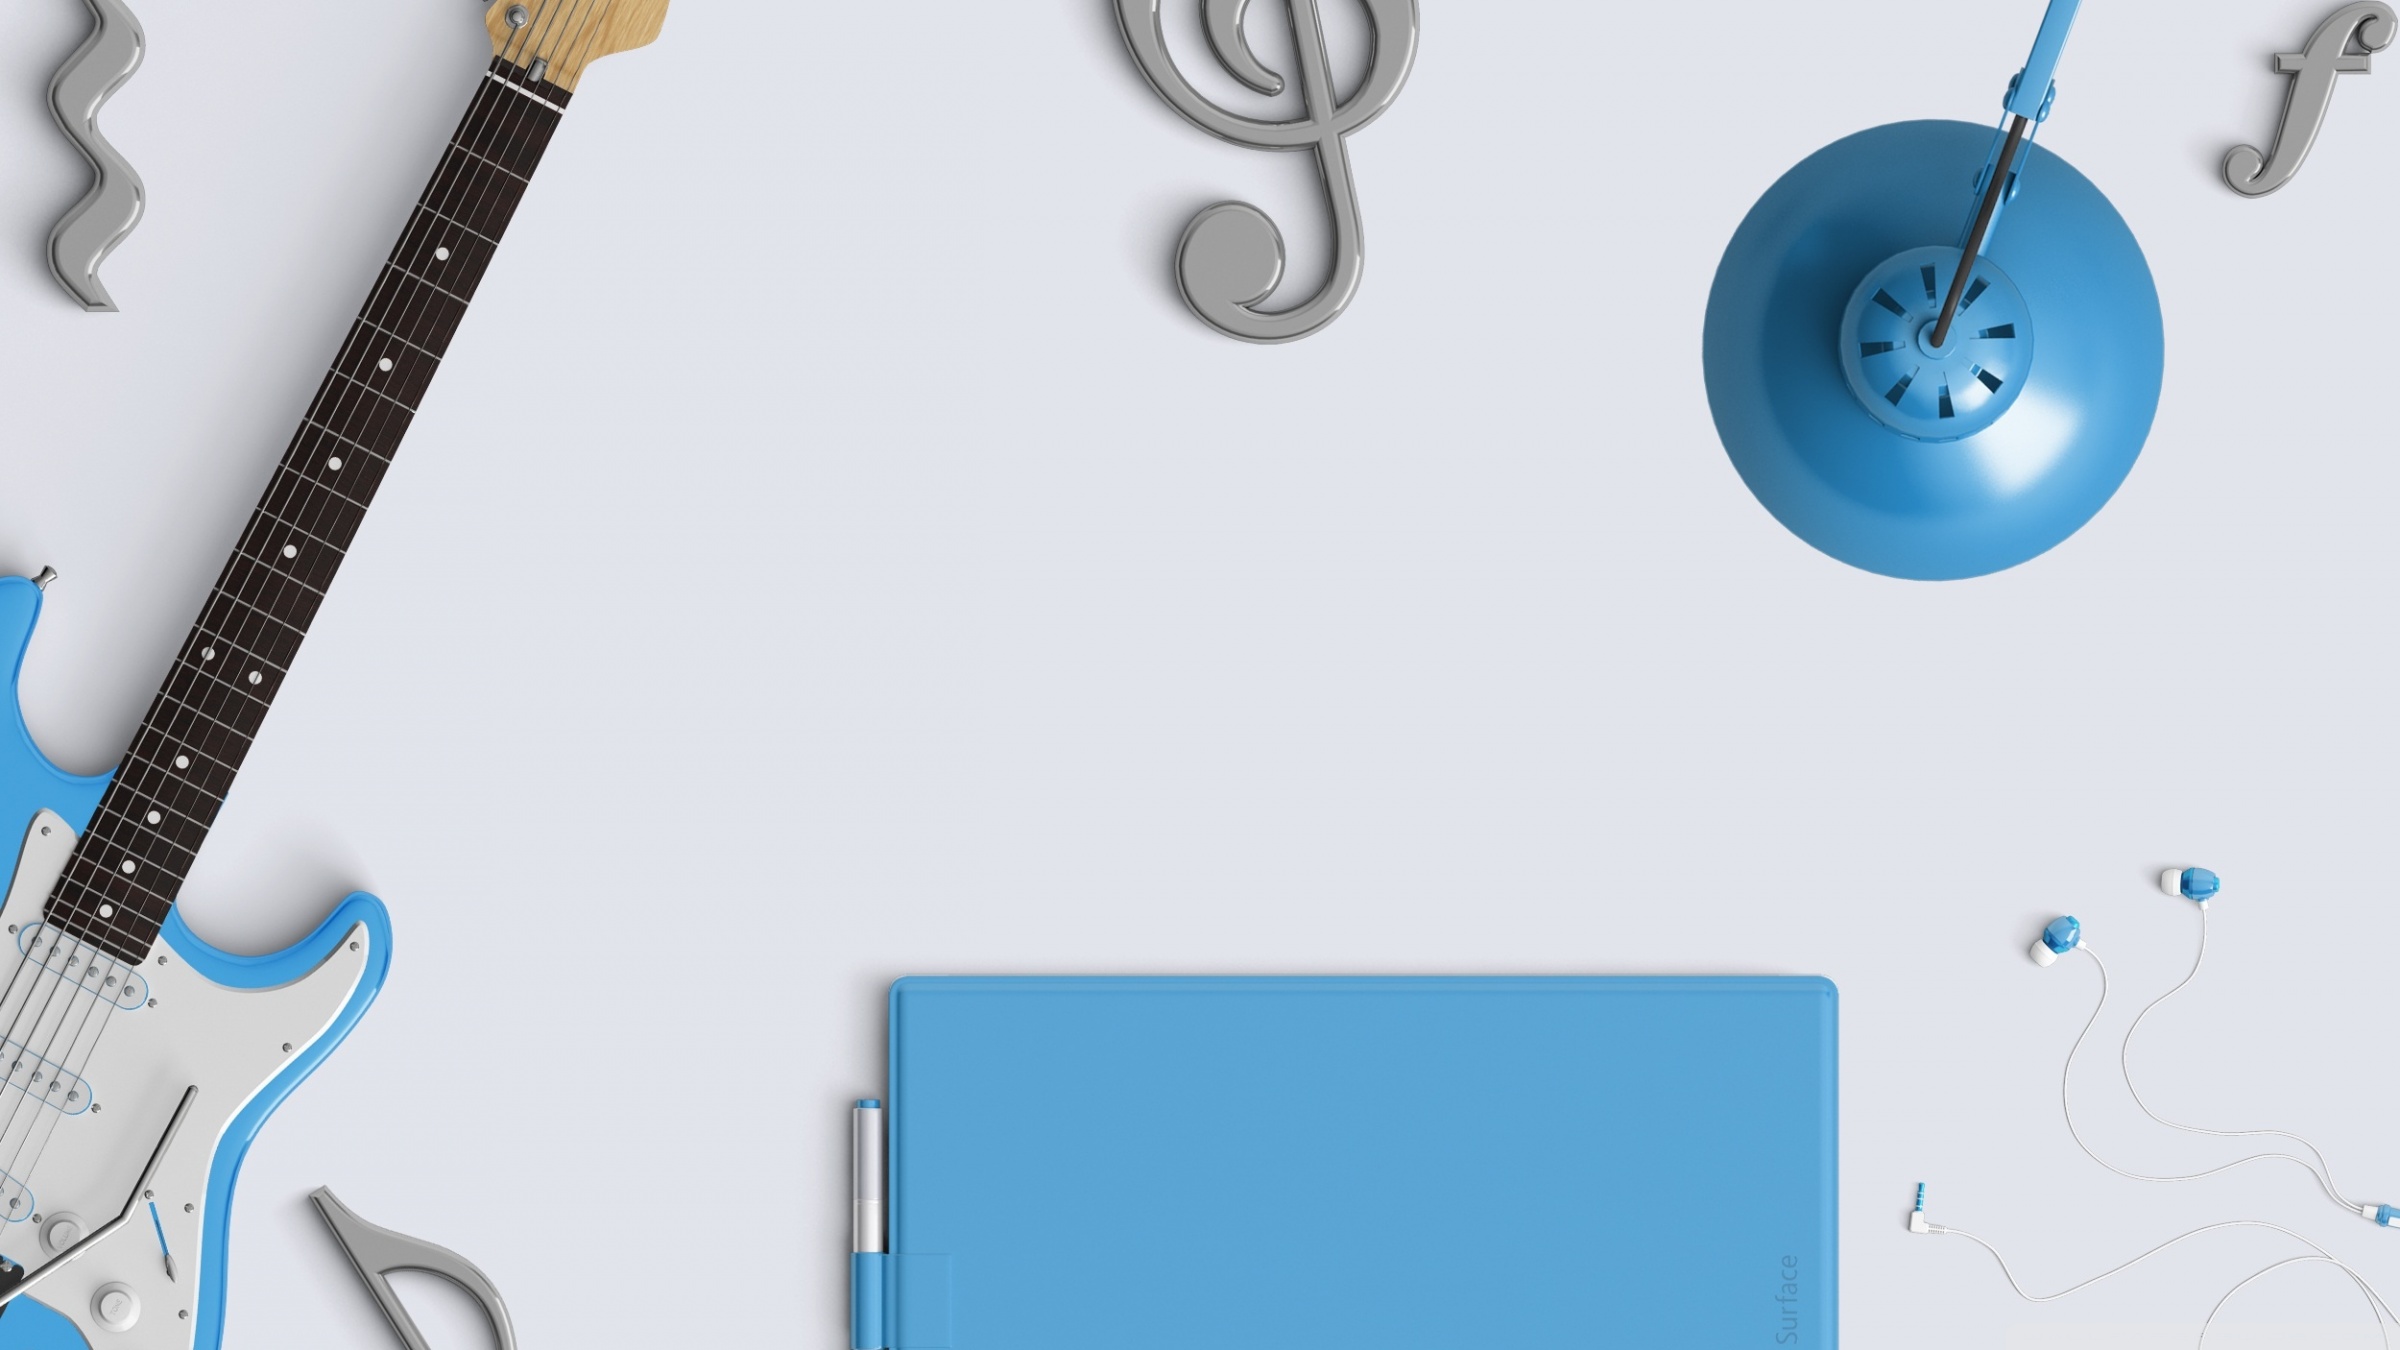 Music Background Ultra Hd Desktop Background Wallpaper For 4k Uhd Tv Tablet Smartphone